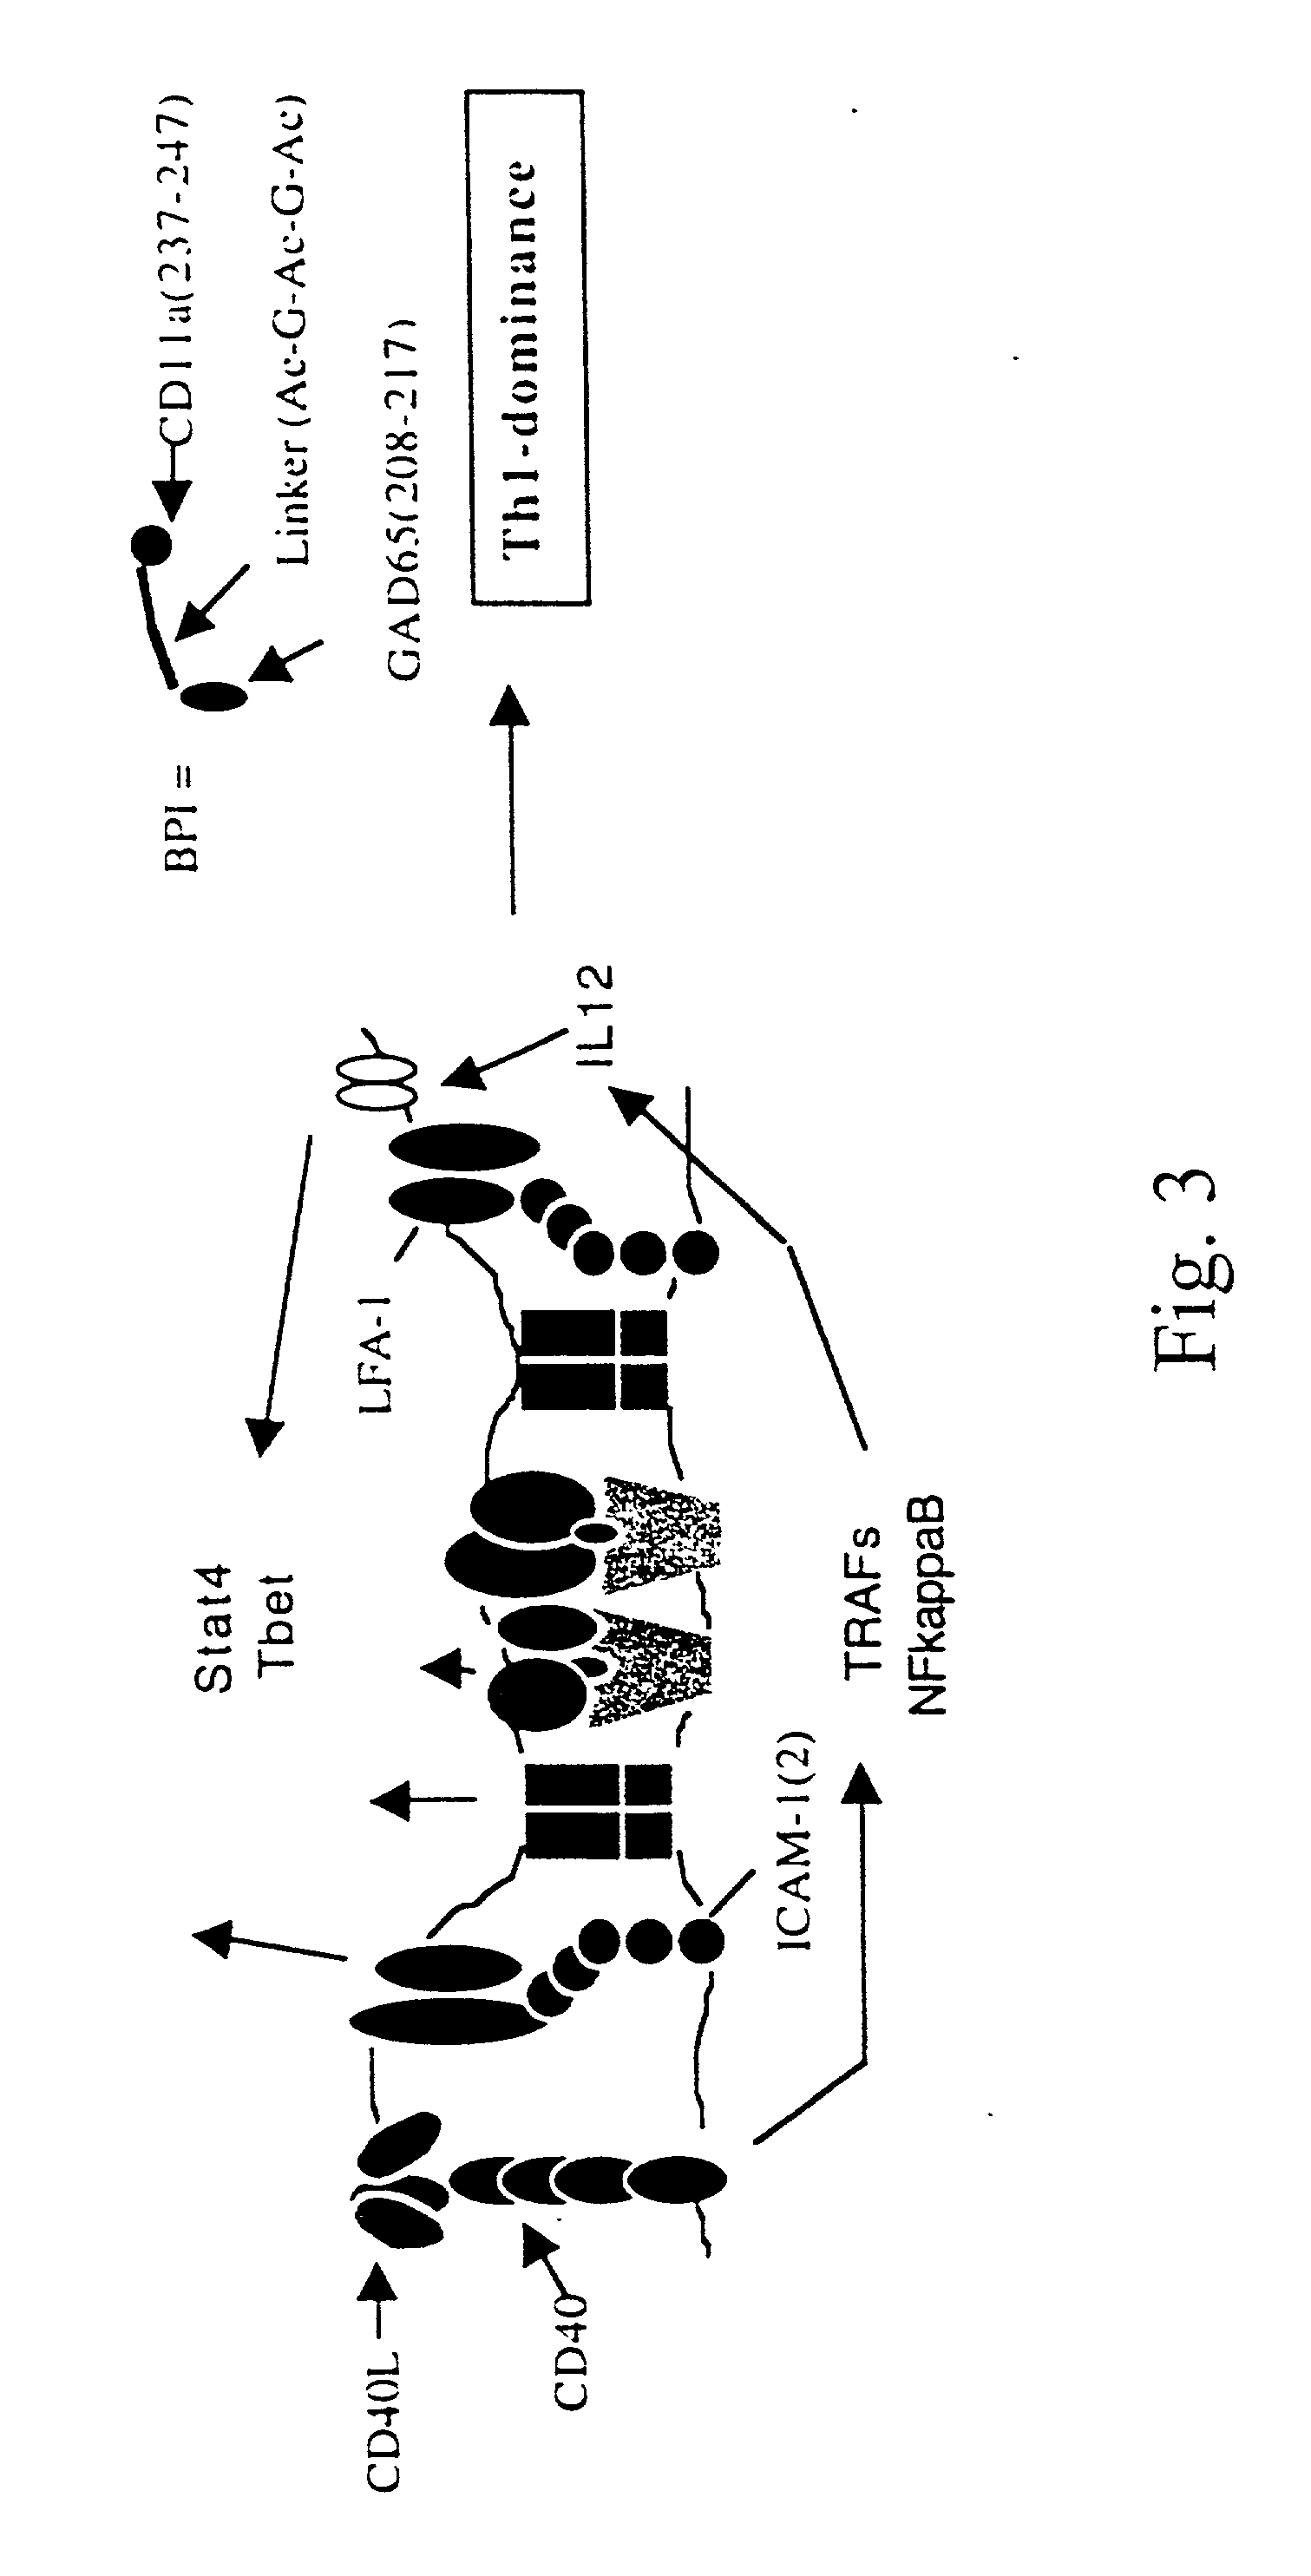 Signal-1/signal-2 bifunctional peptide inhibitors